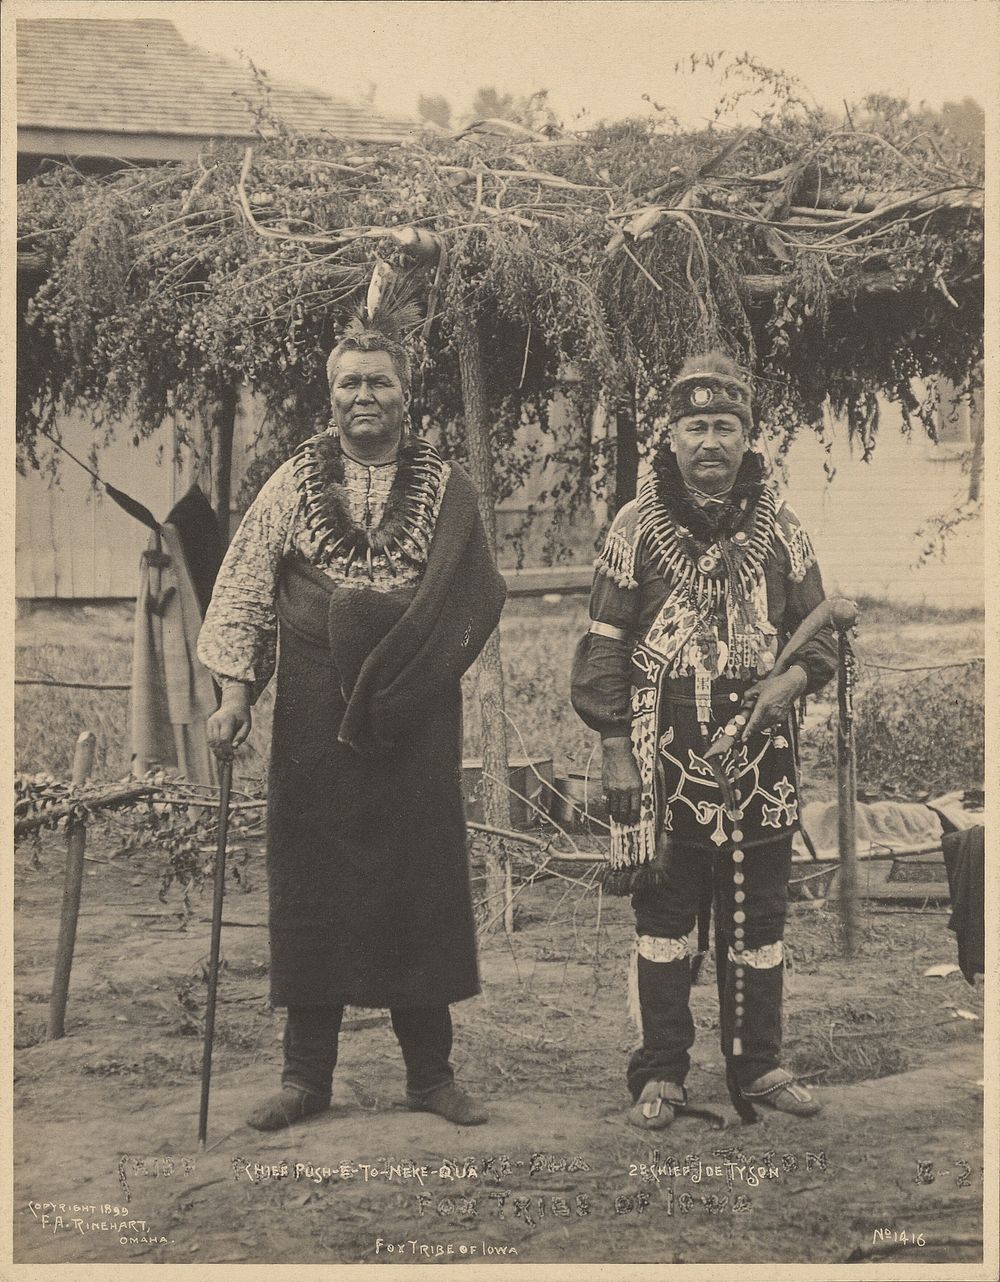 Chief Push-E-To-Neke-Qua and 2nd Chief Joe Tyson, Fox Tribe of Iowa by Adolph F Muhr and Frank A Rinehart